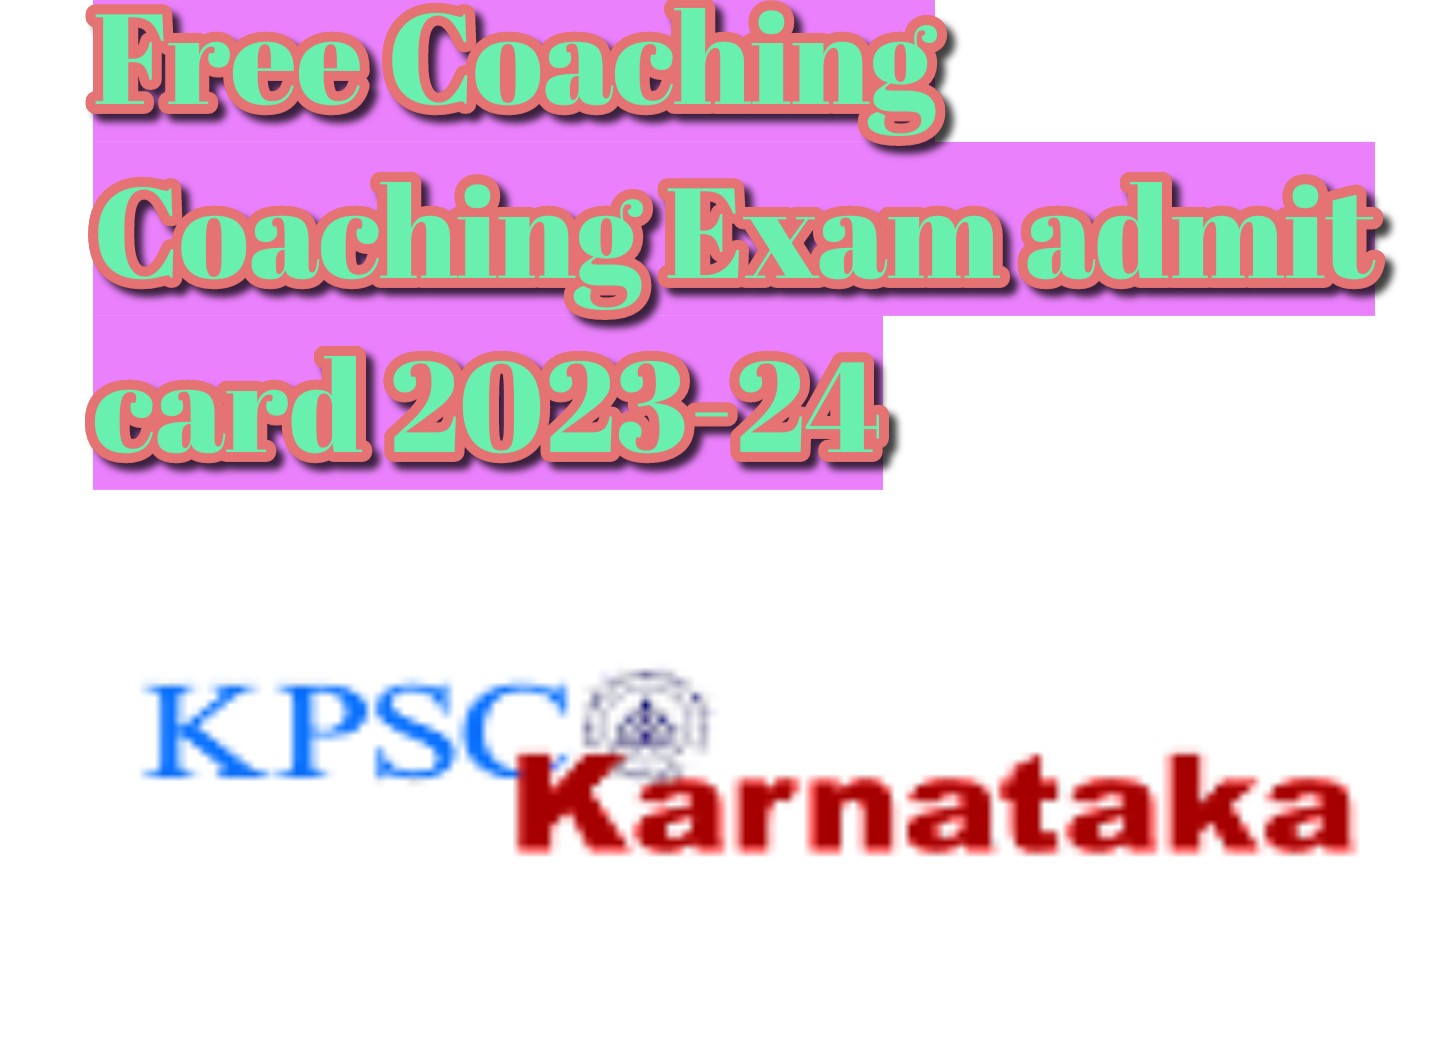 Free Coaching Exam Admit Card 2023-24